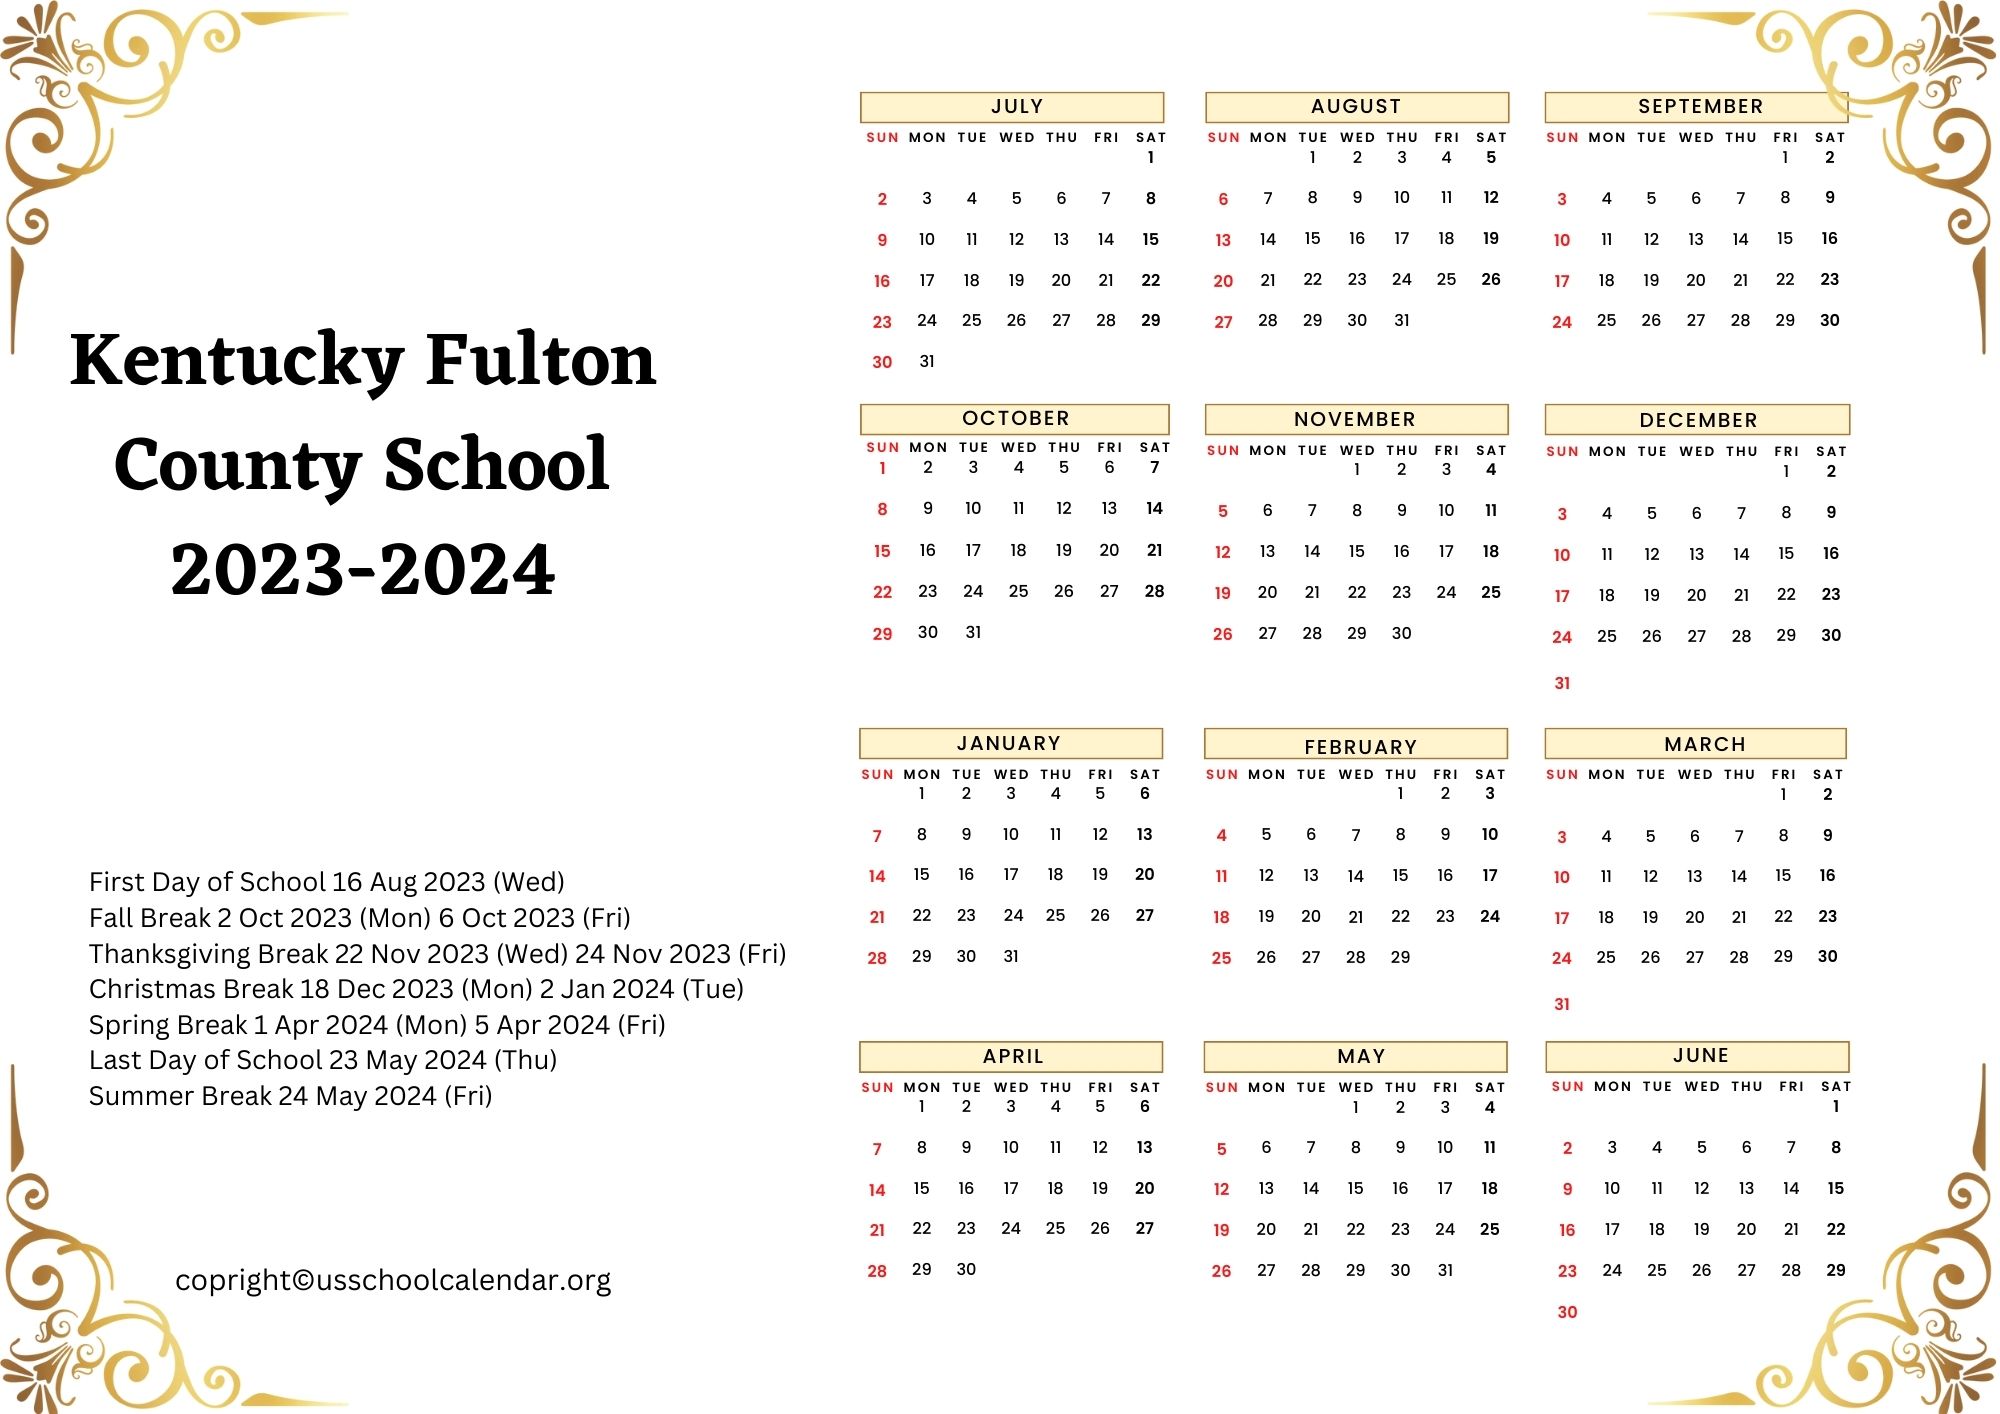 Kentucky Fulton County School Calendar With Holidays 2023 2024